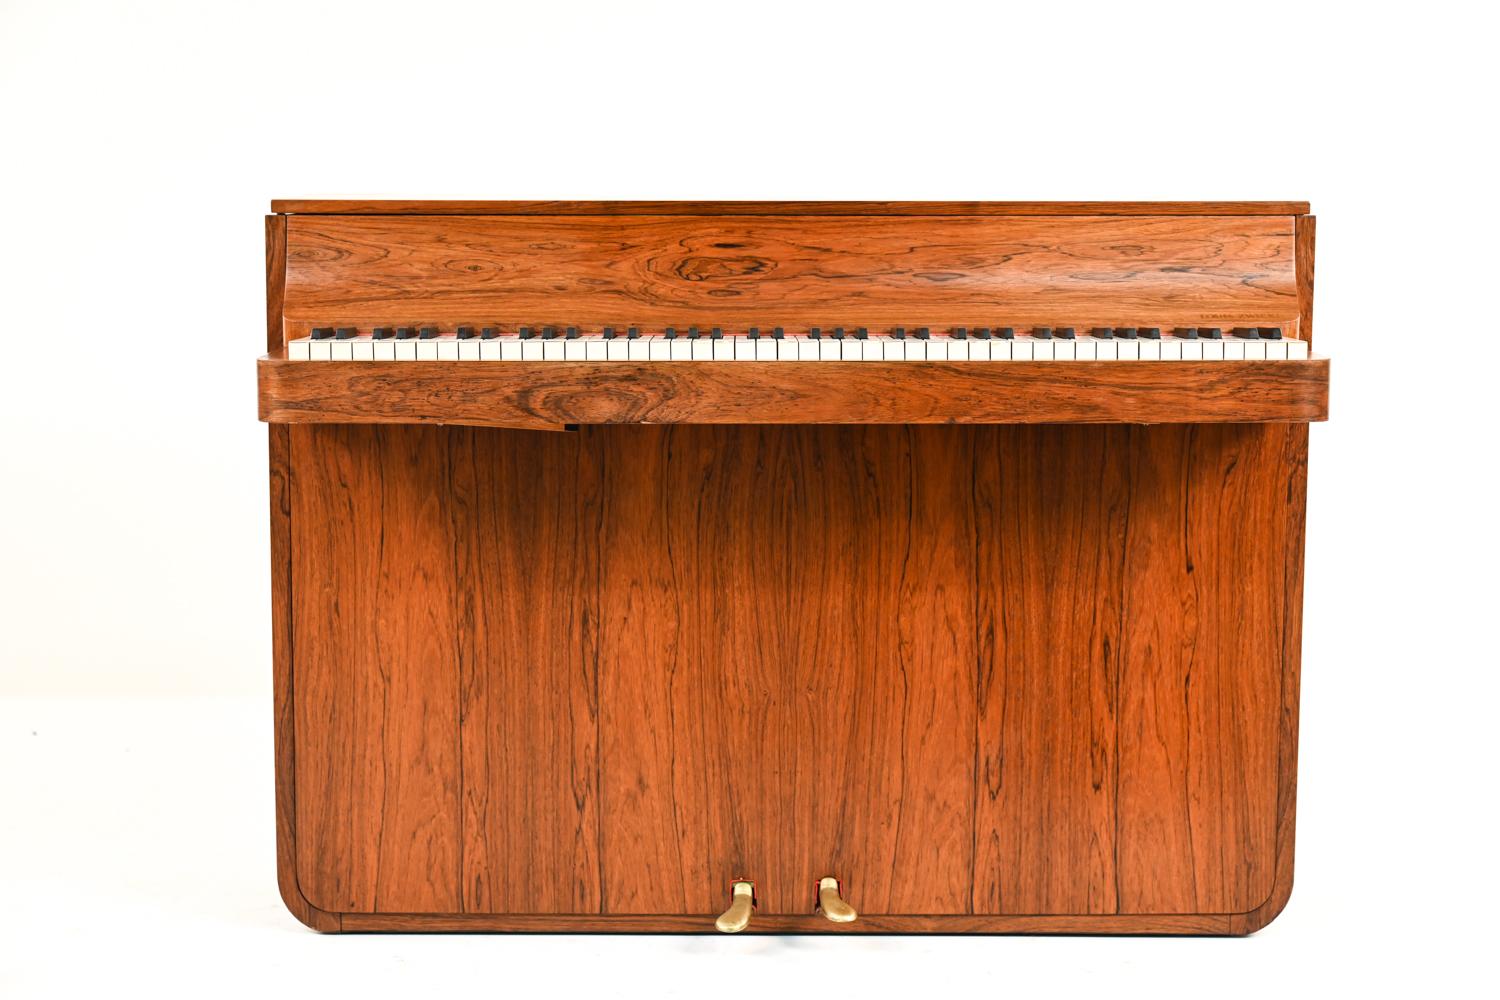 Danish Vintage Rosewood Pianette by Louis Zwicki, 1950s